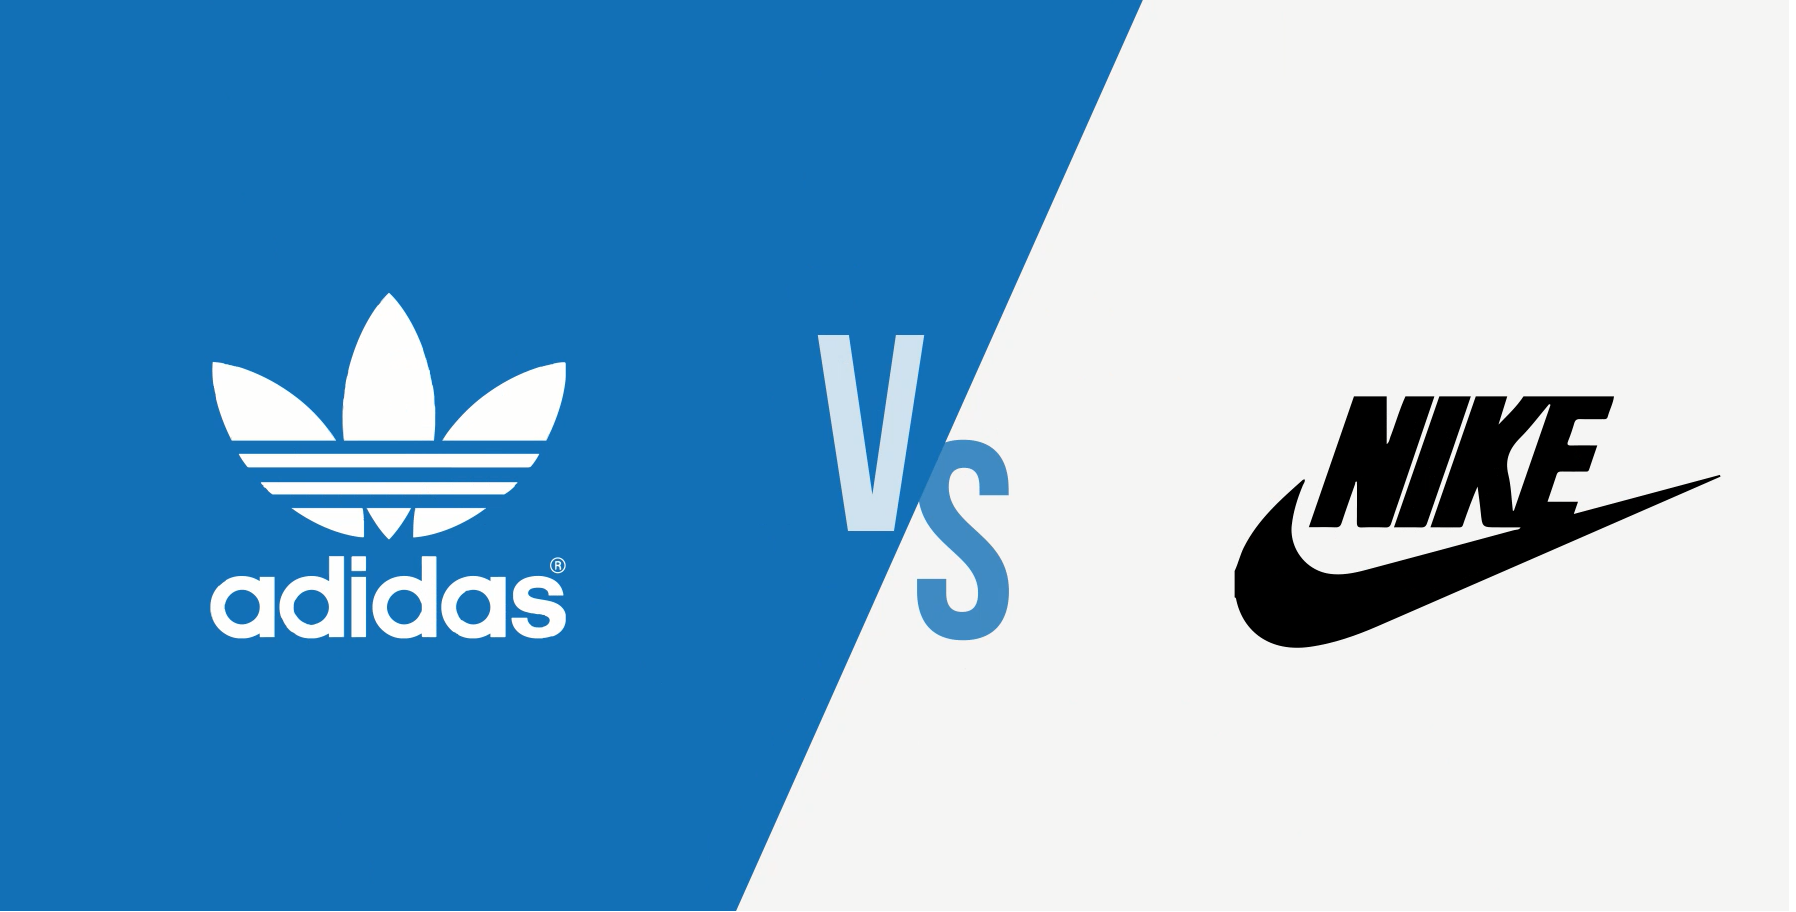 Версии адидас. Nike vs adidas. Найк вс адидас. Логотип найк и адидас. Бренды найк адидас.